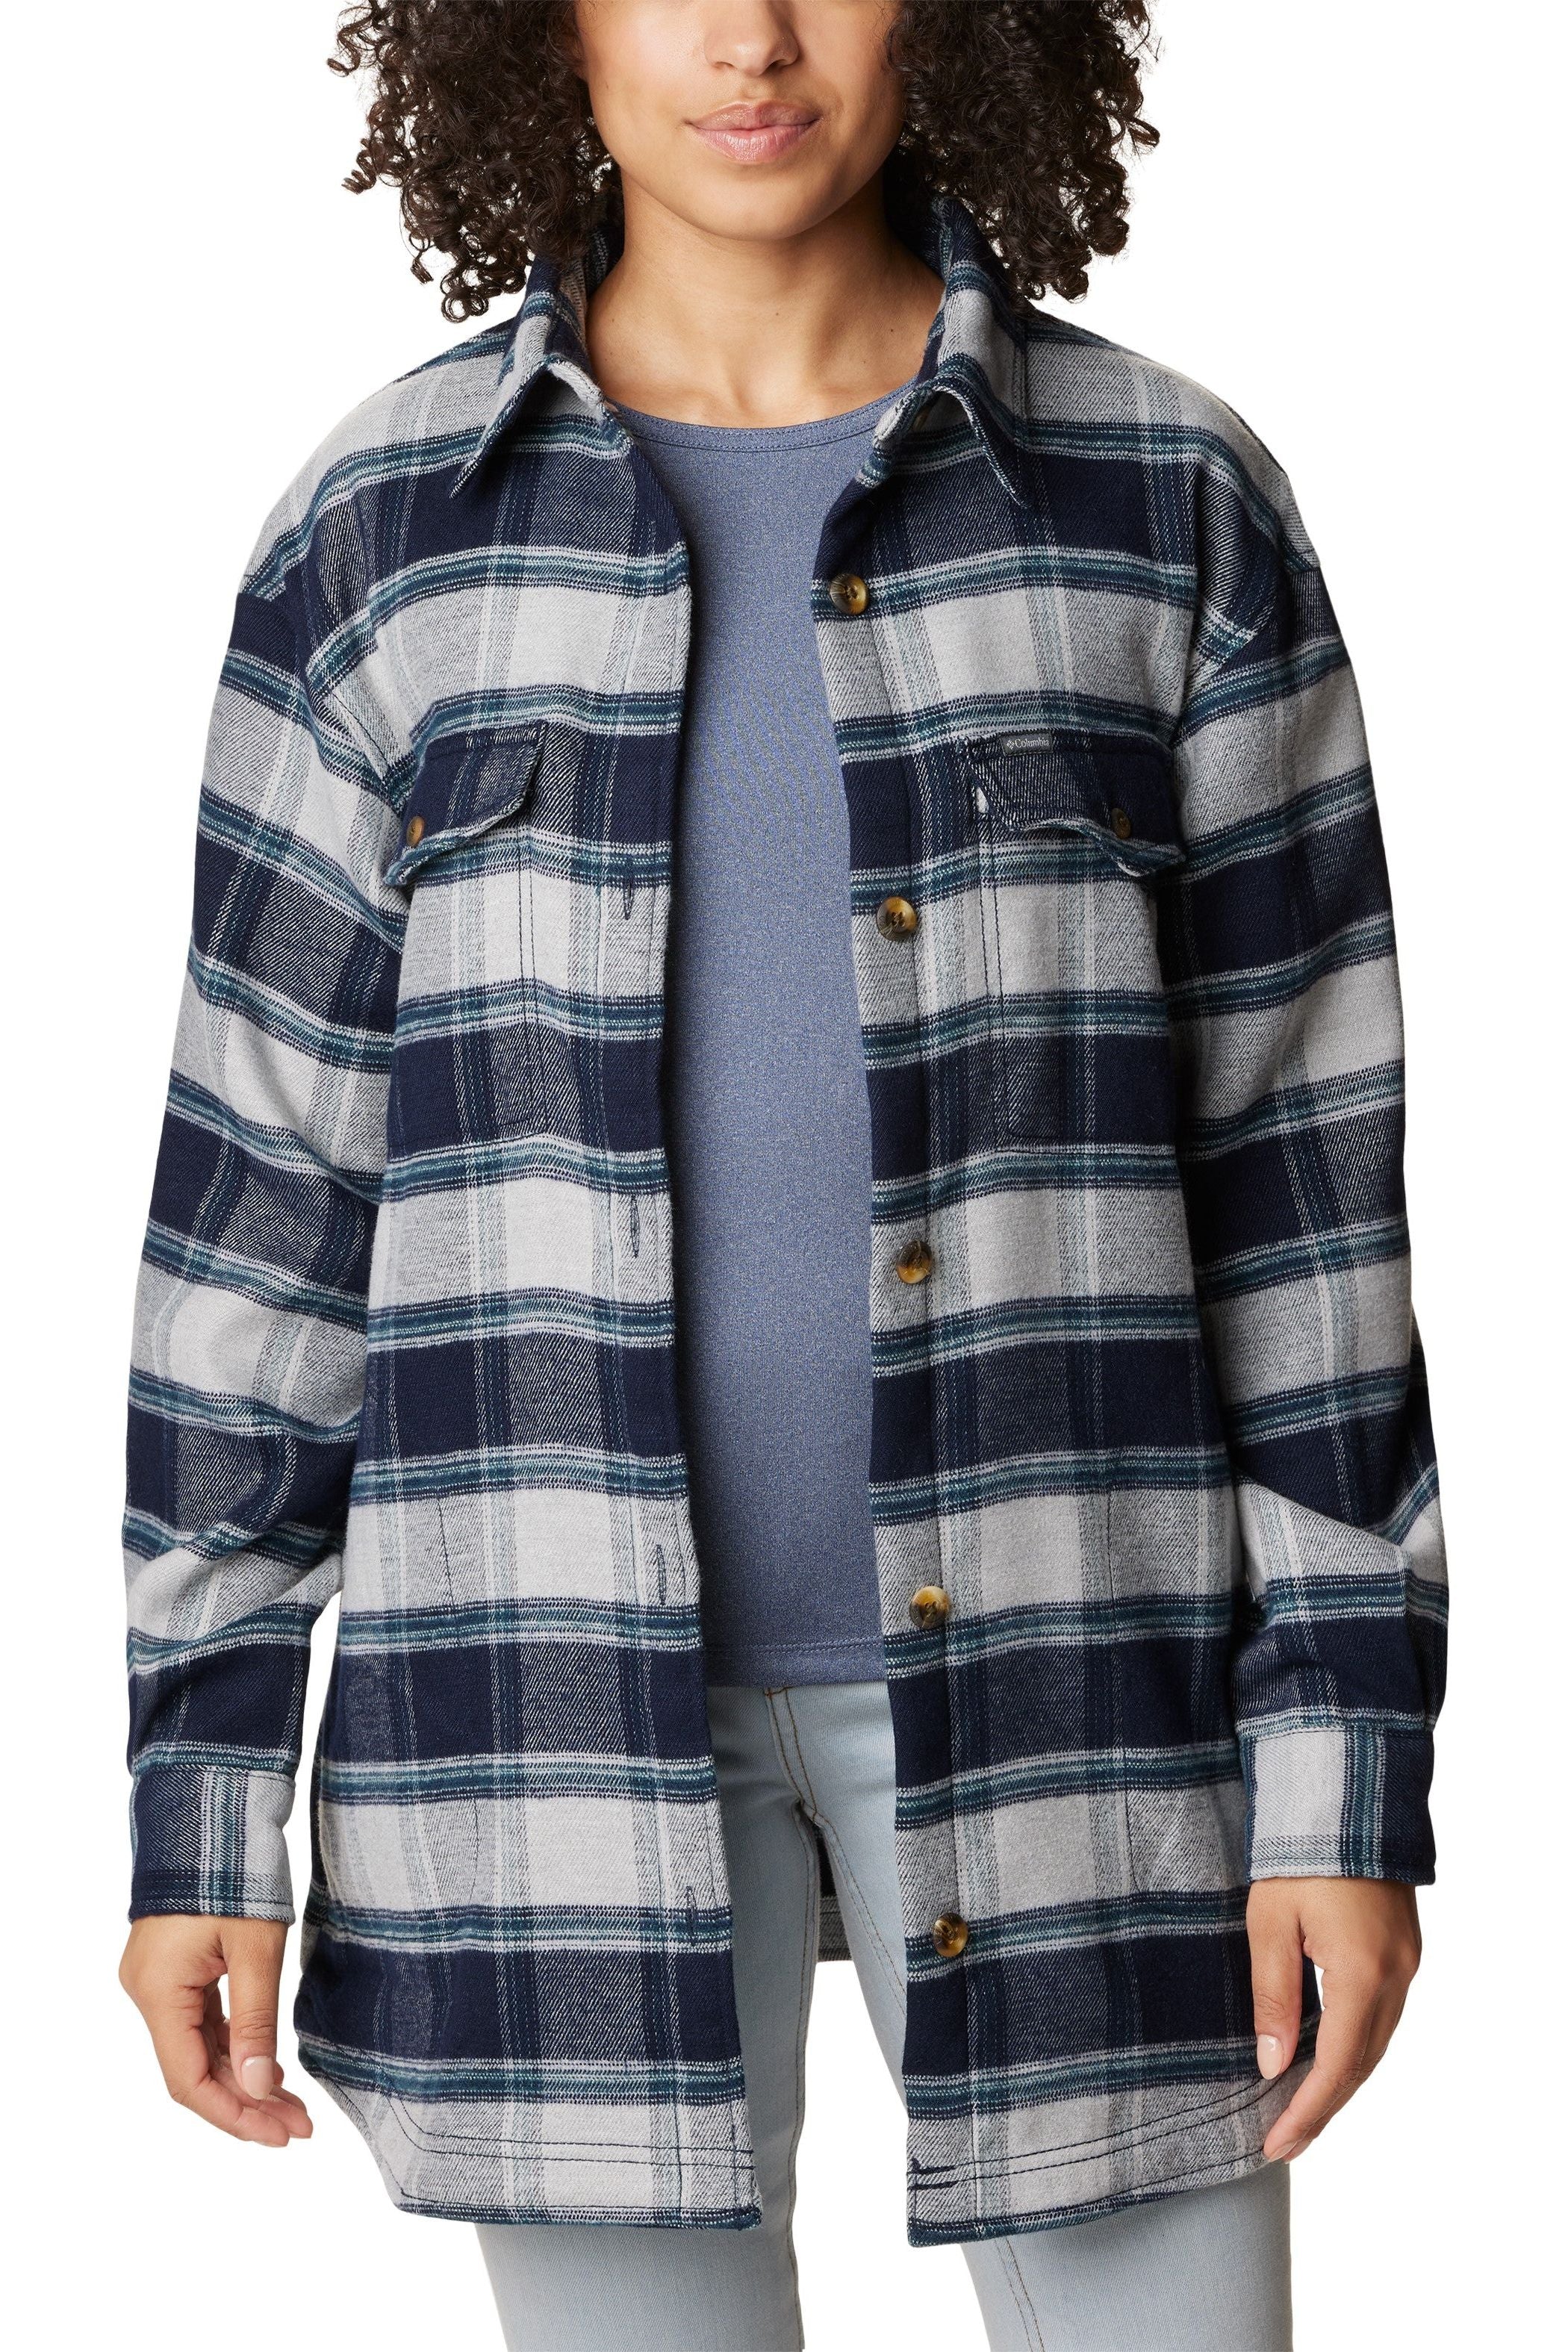 Columbia Calico Basin Shirt Jacket - Style 2052221472, front open